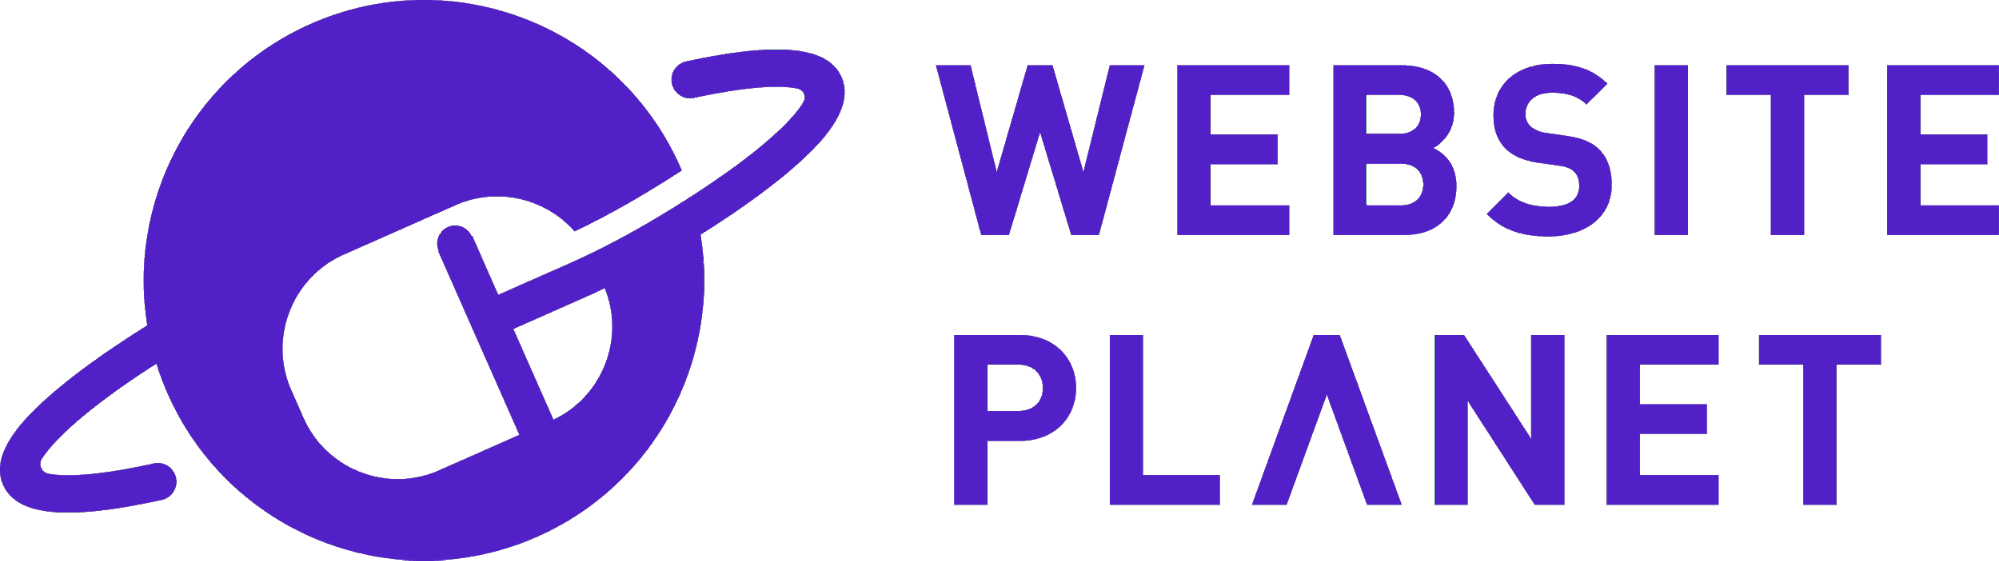 Website Planet logo from DesignCrowd